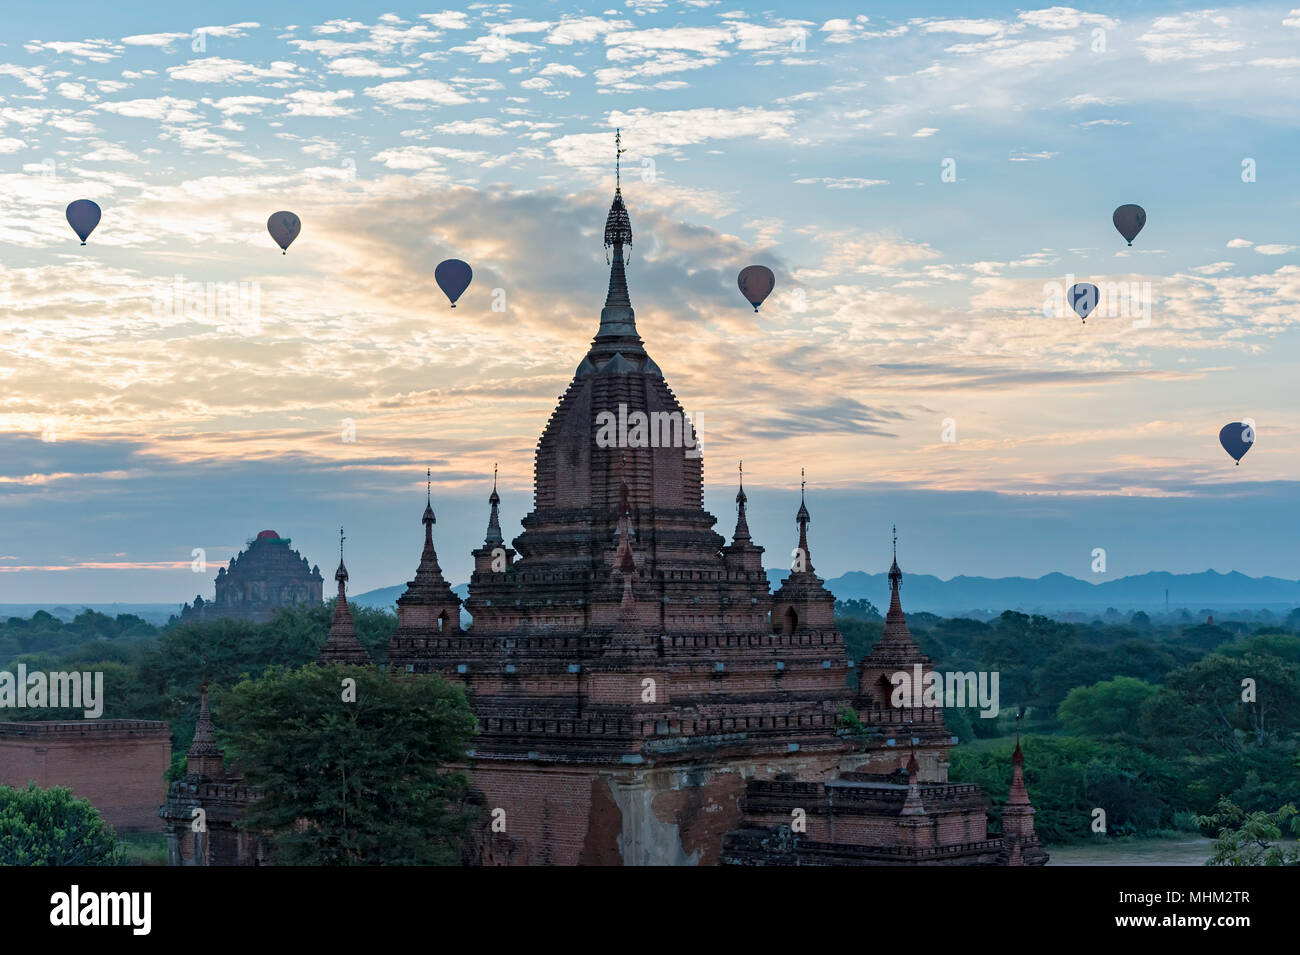 Hot-air balloons and temples at sunrise, Shwe Nan Yin Taw Monastic Complex, Bagan, Myanmar Stock Photo